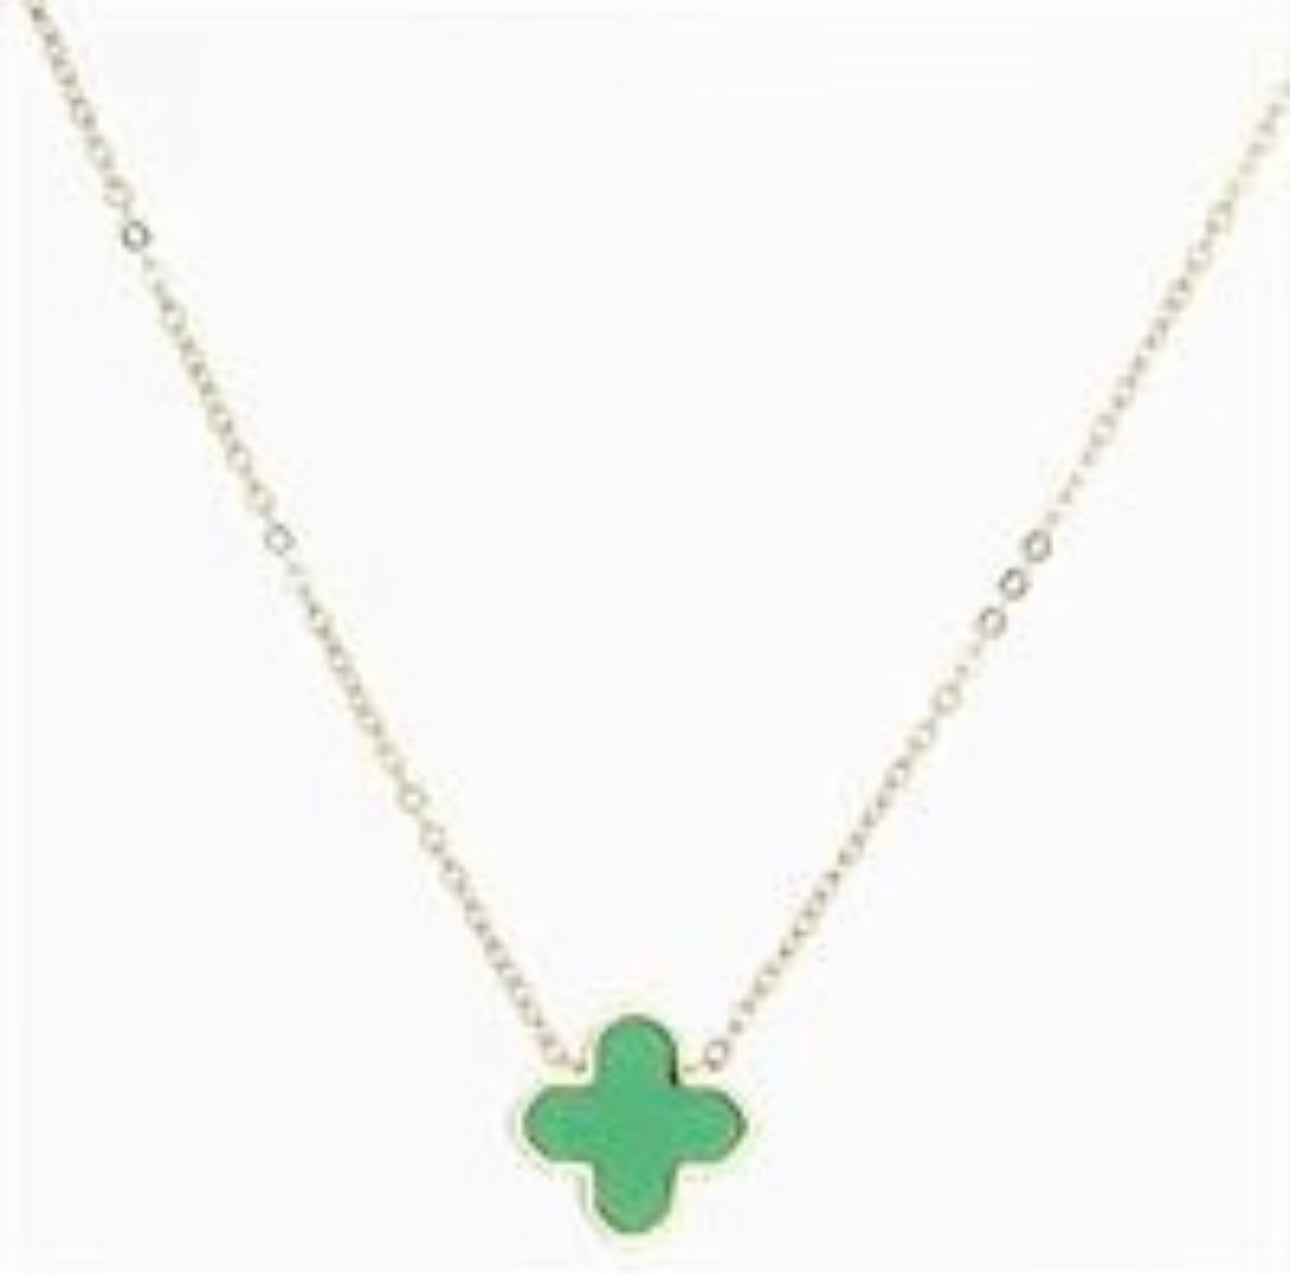 Le Emerald Collier-Necklace